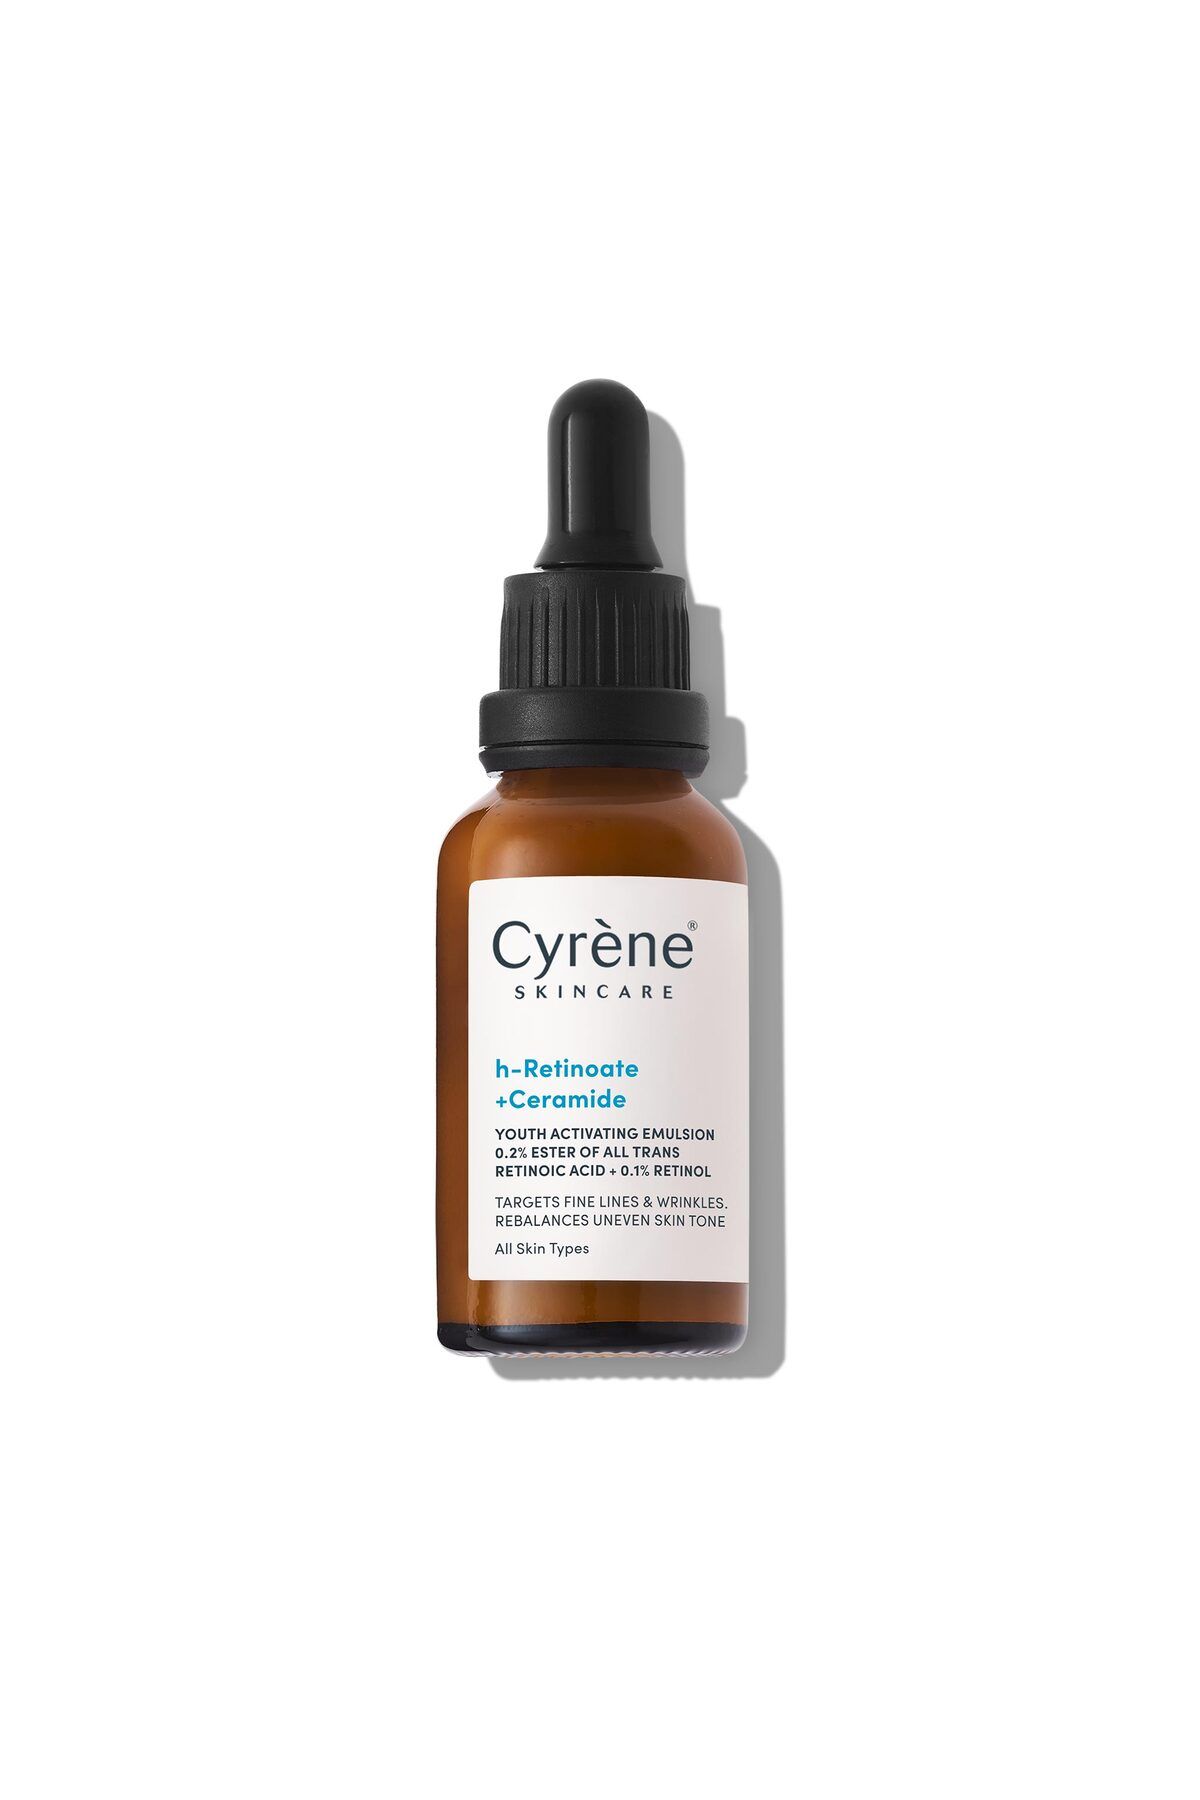 Cyrene h-Retinoate+Ceramide Youth Activating Serum